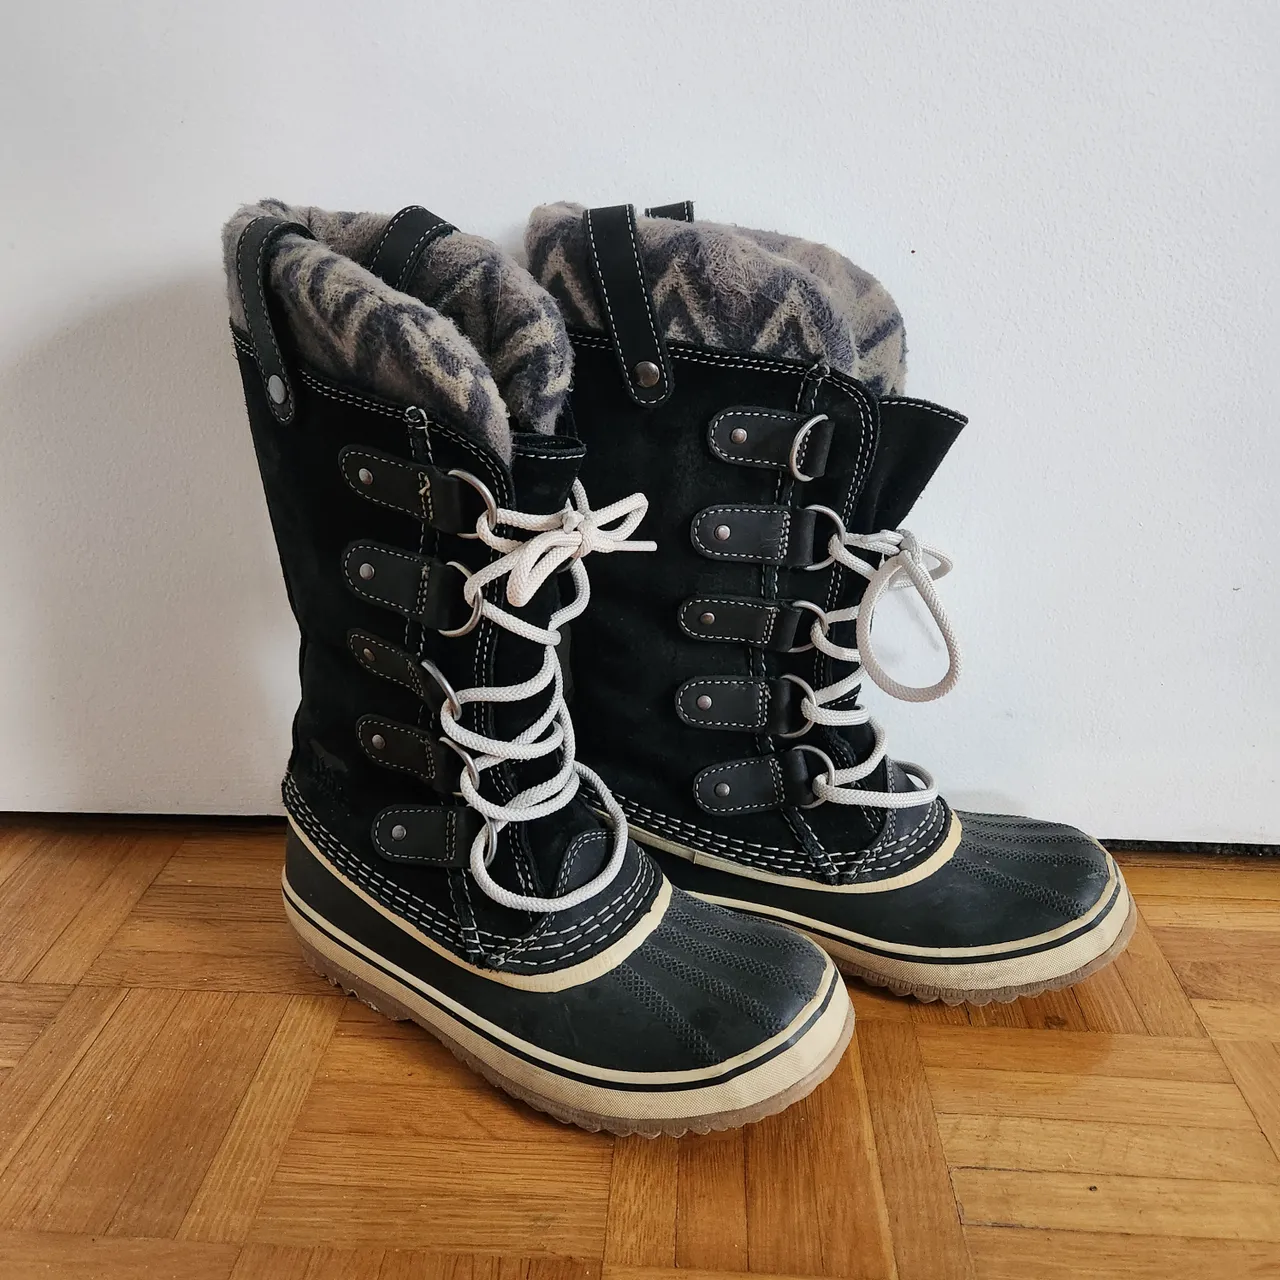 Sorel winter boots size 6/37 photo 1